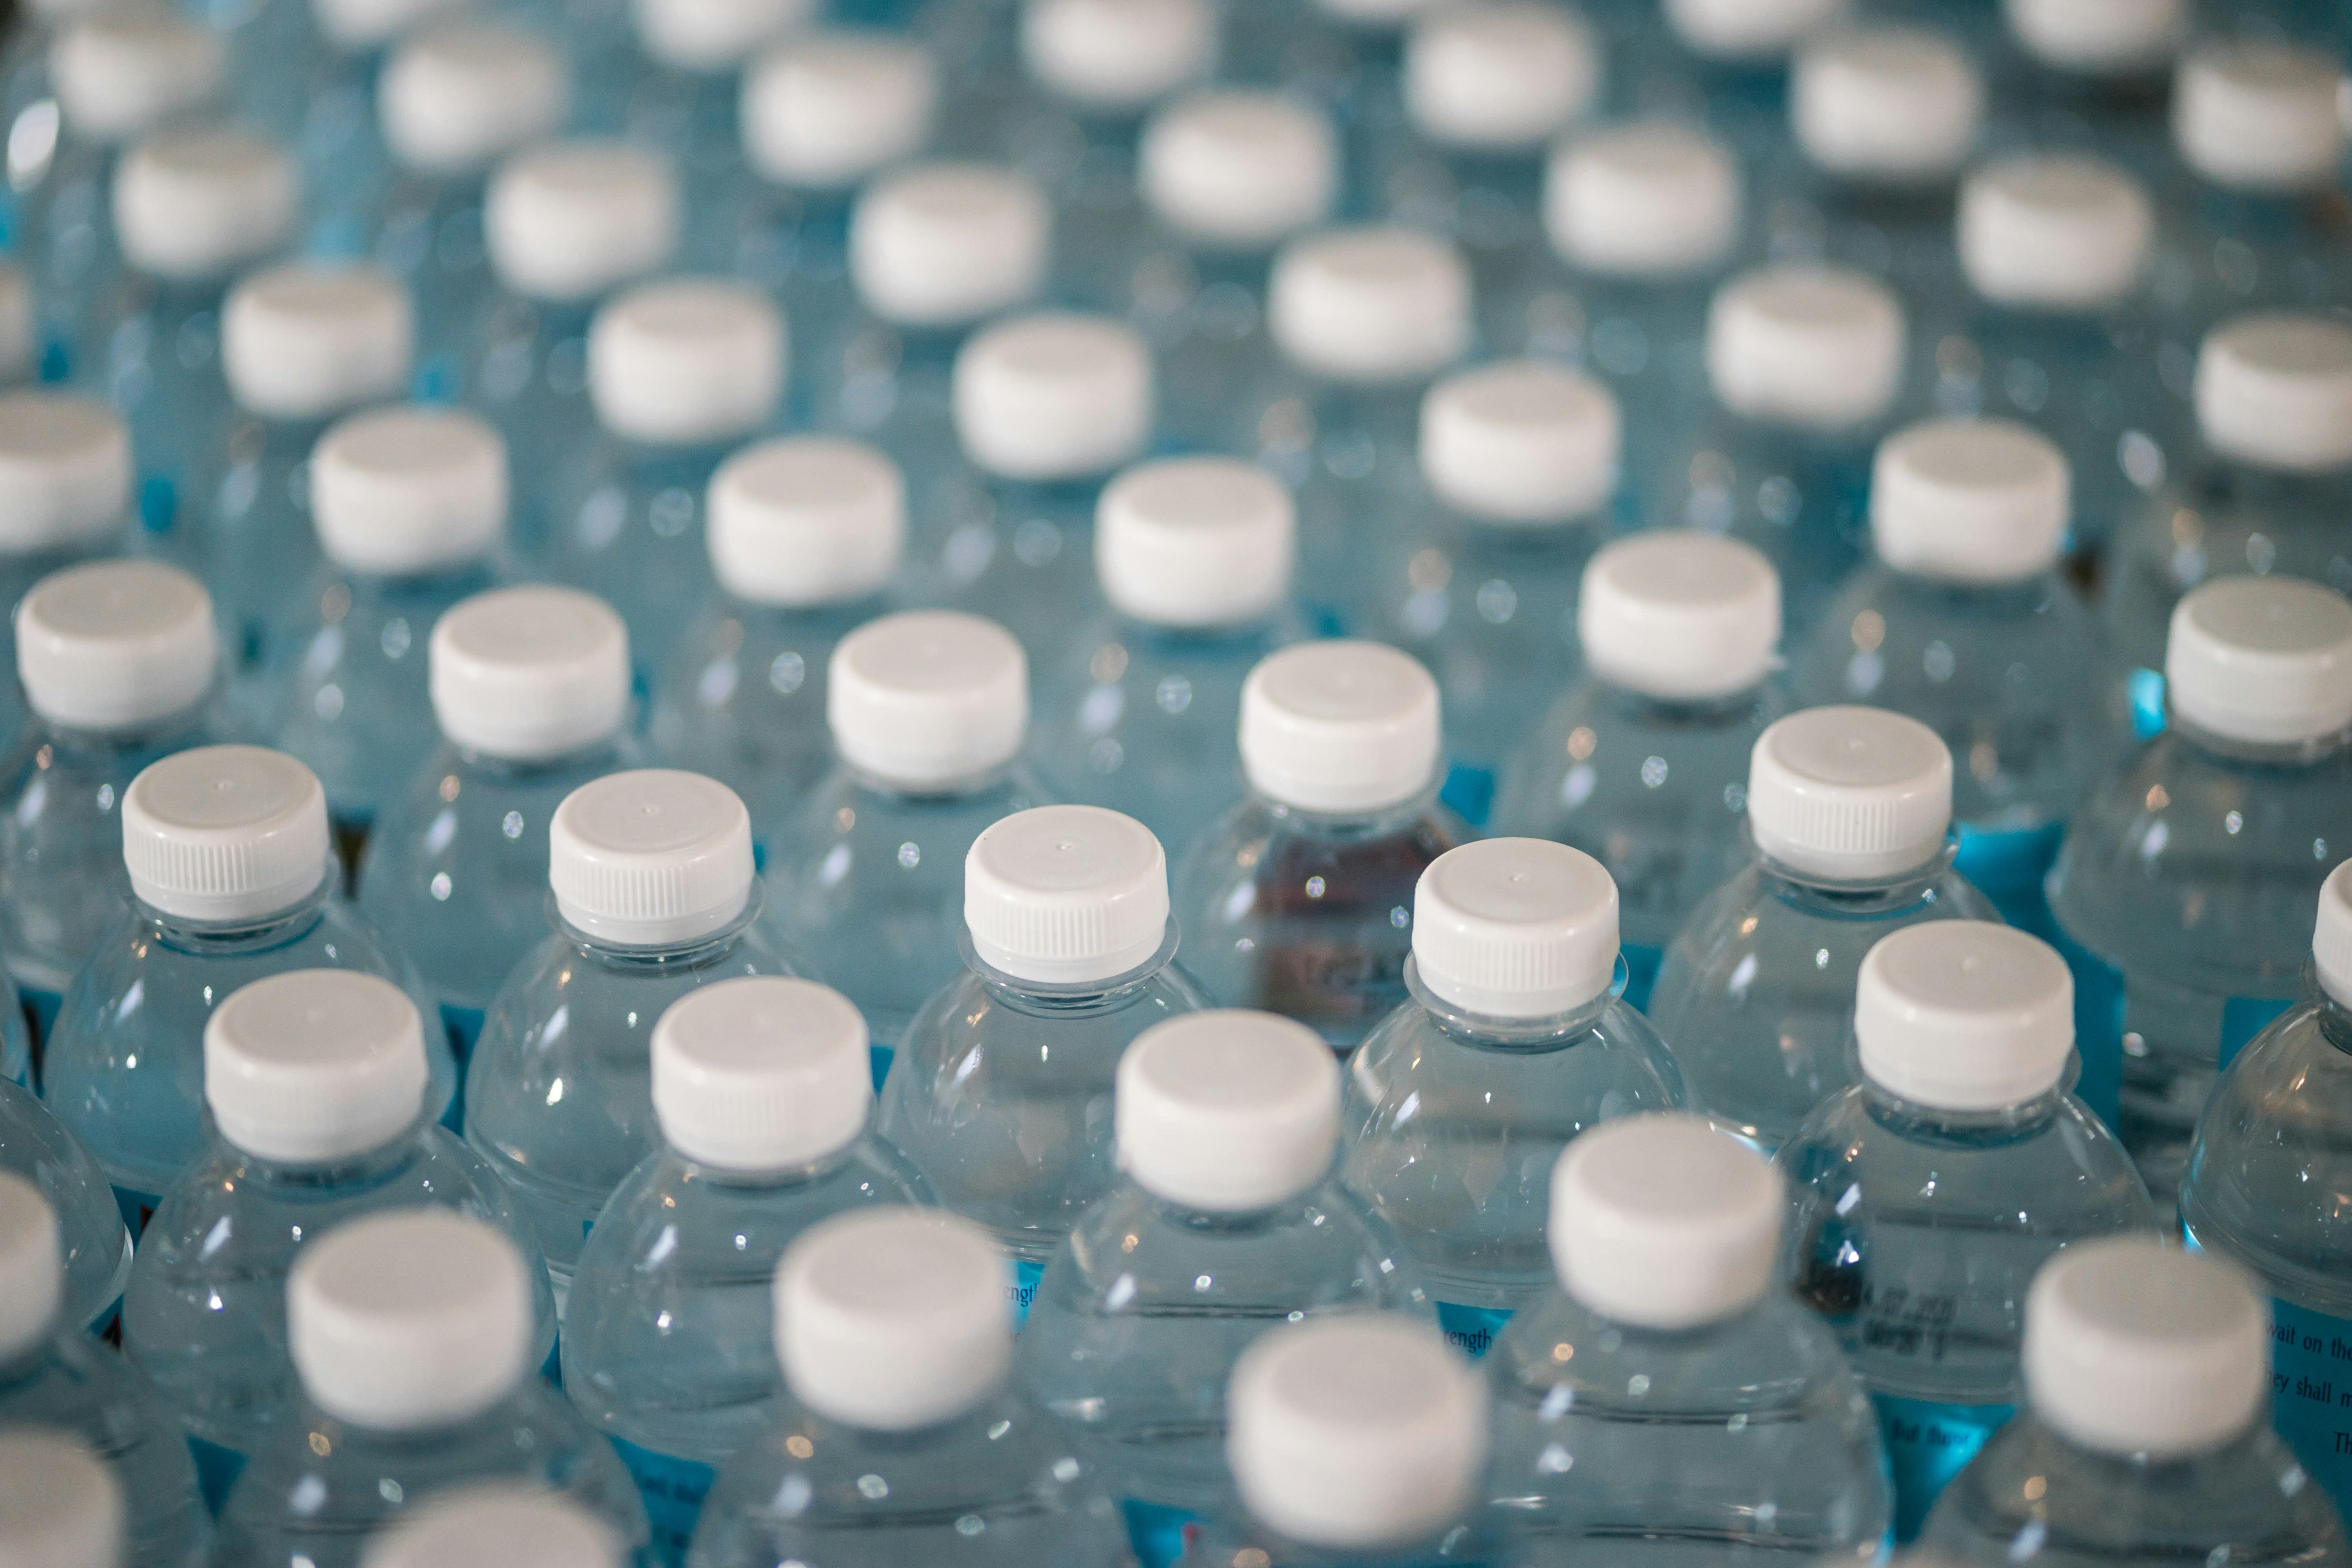 Plastic bottles arranged in rows